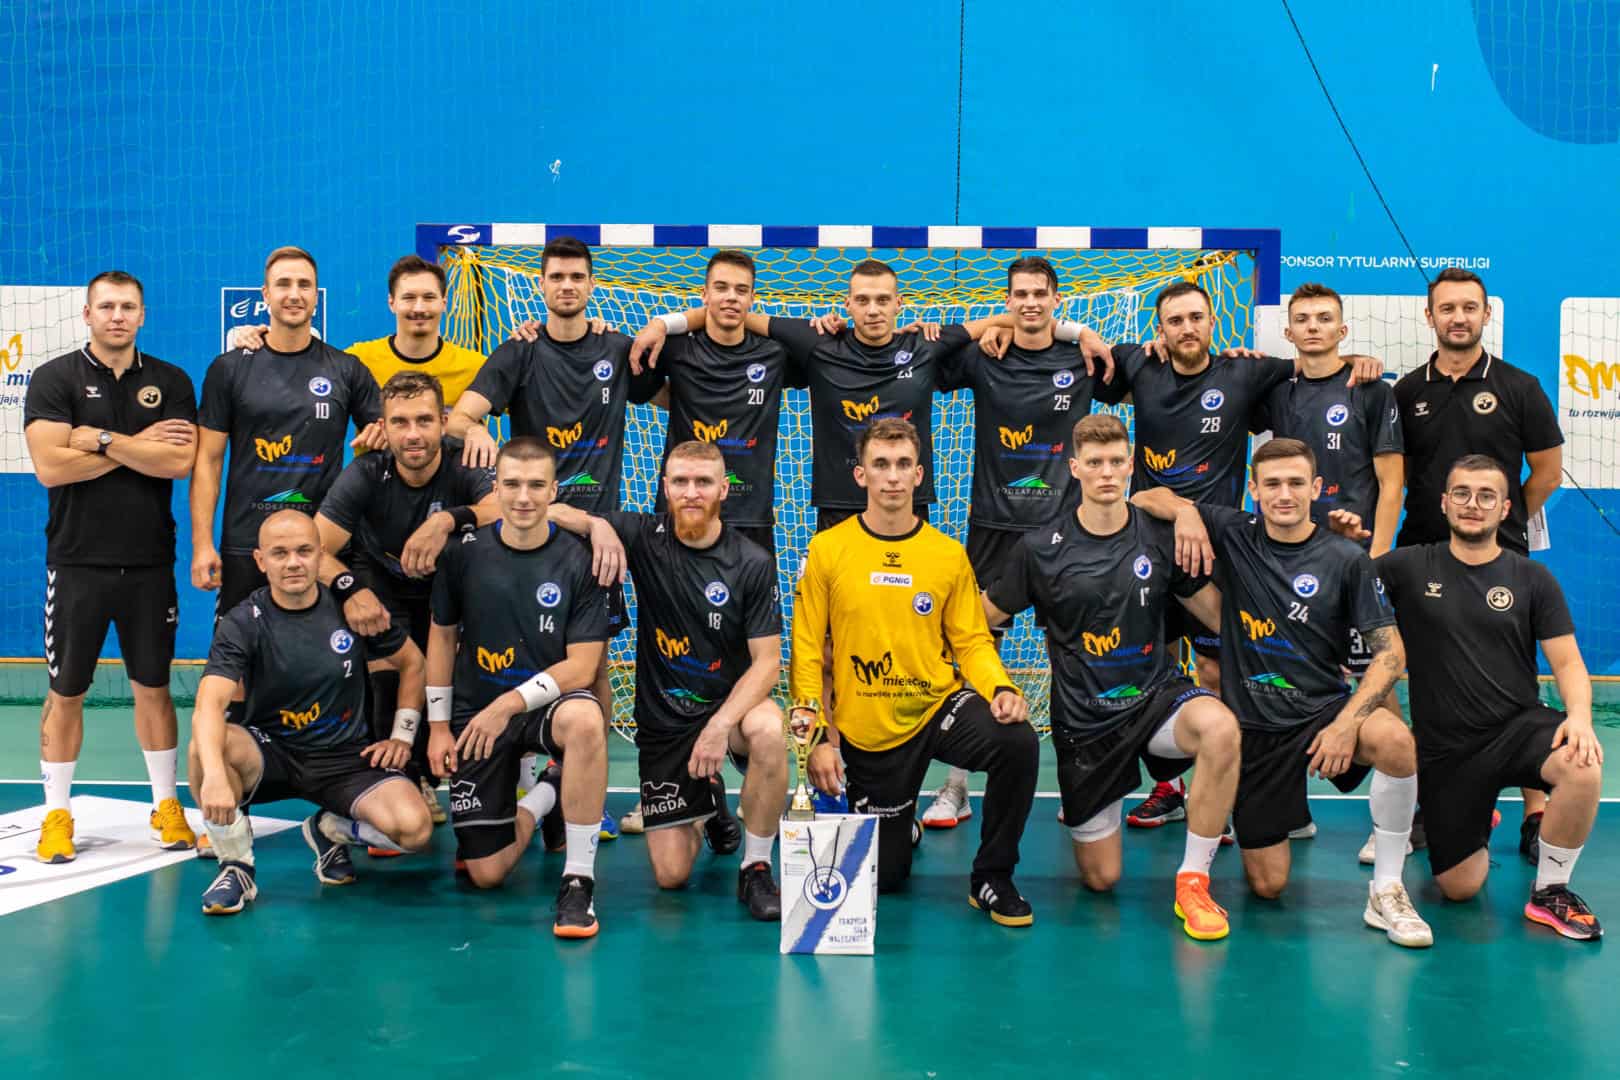 Handball Stal Mielec